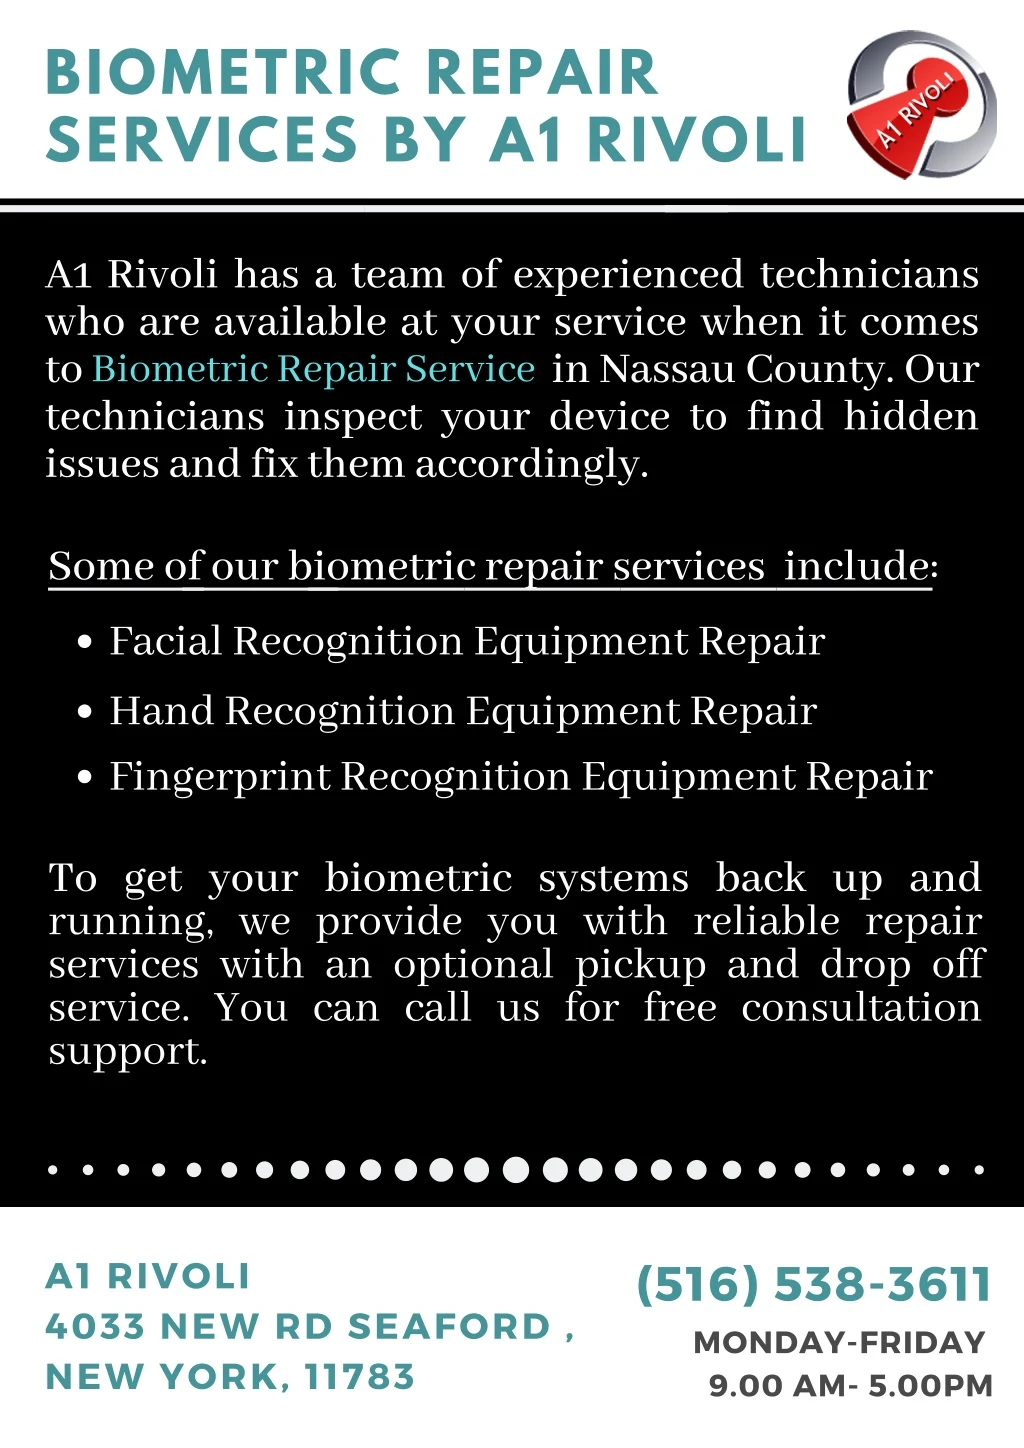 biometric repair services by a1 rivoli